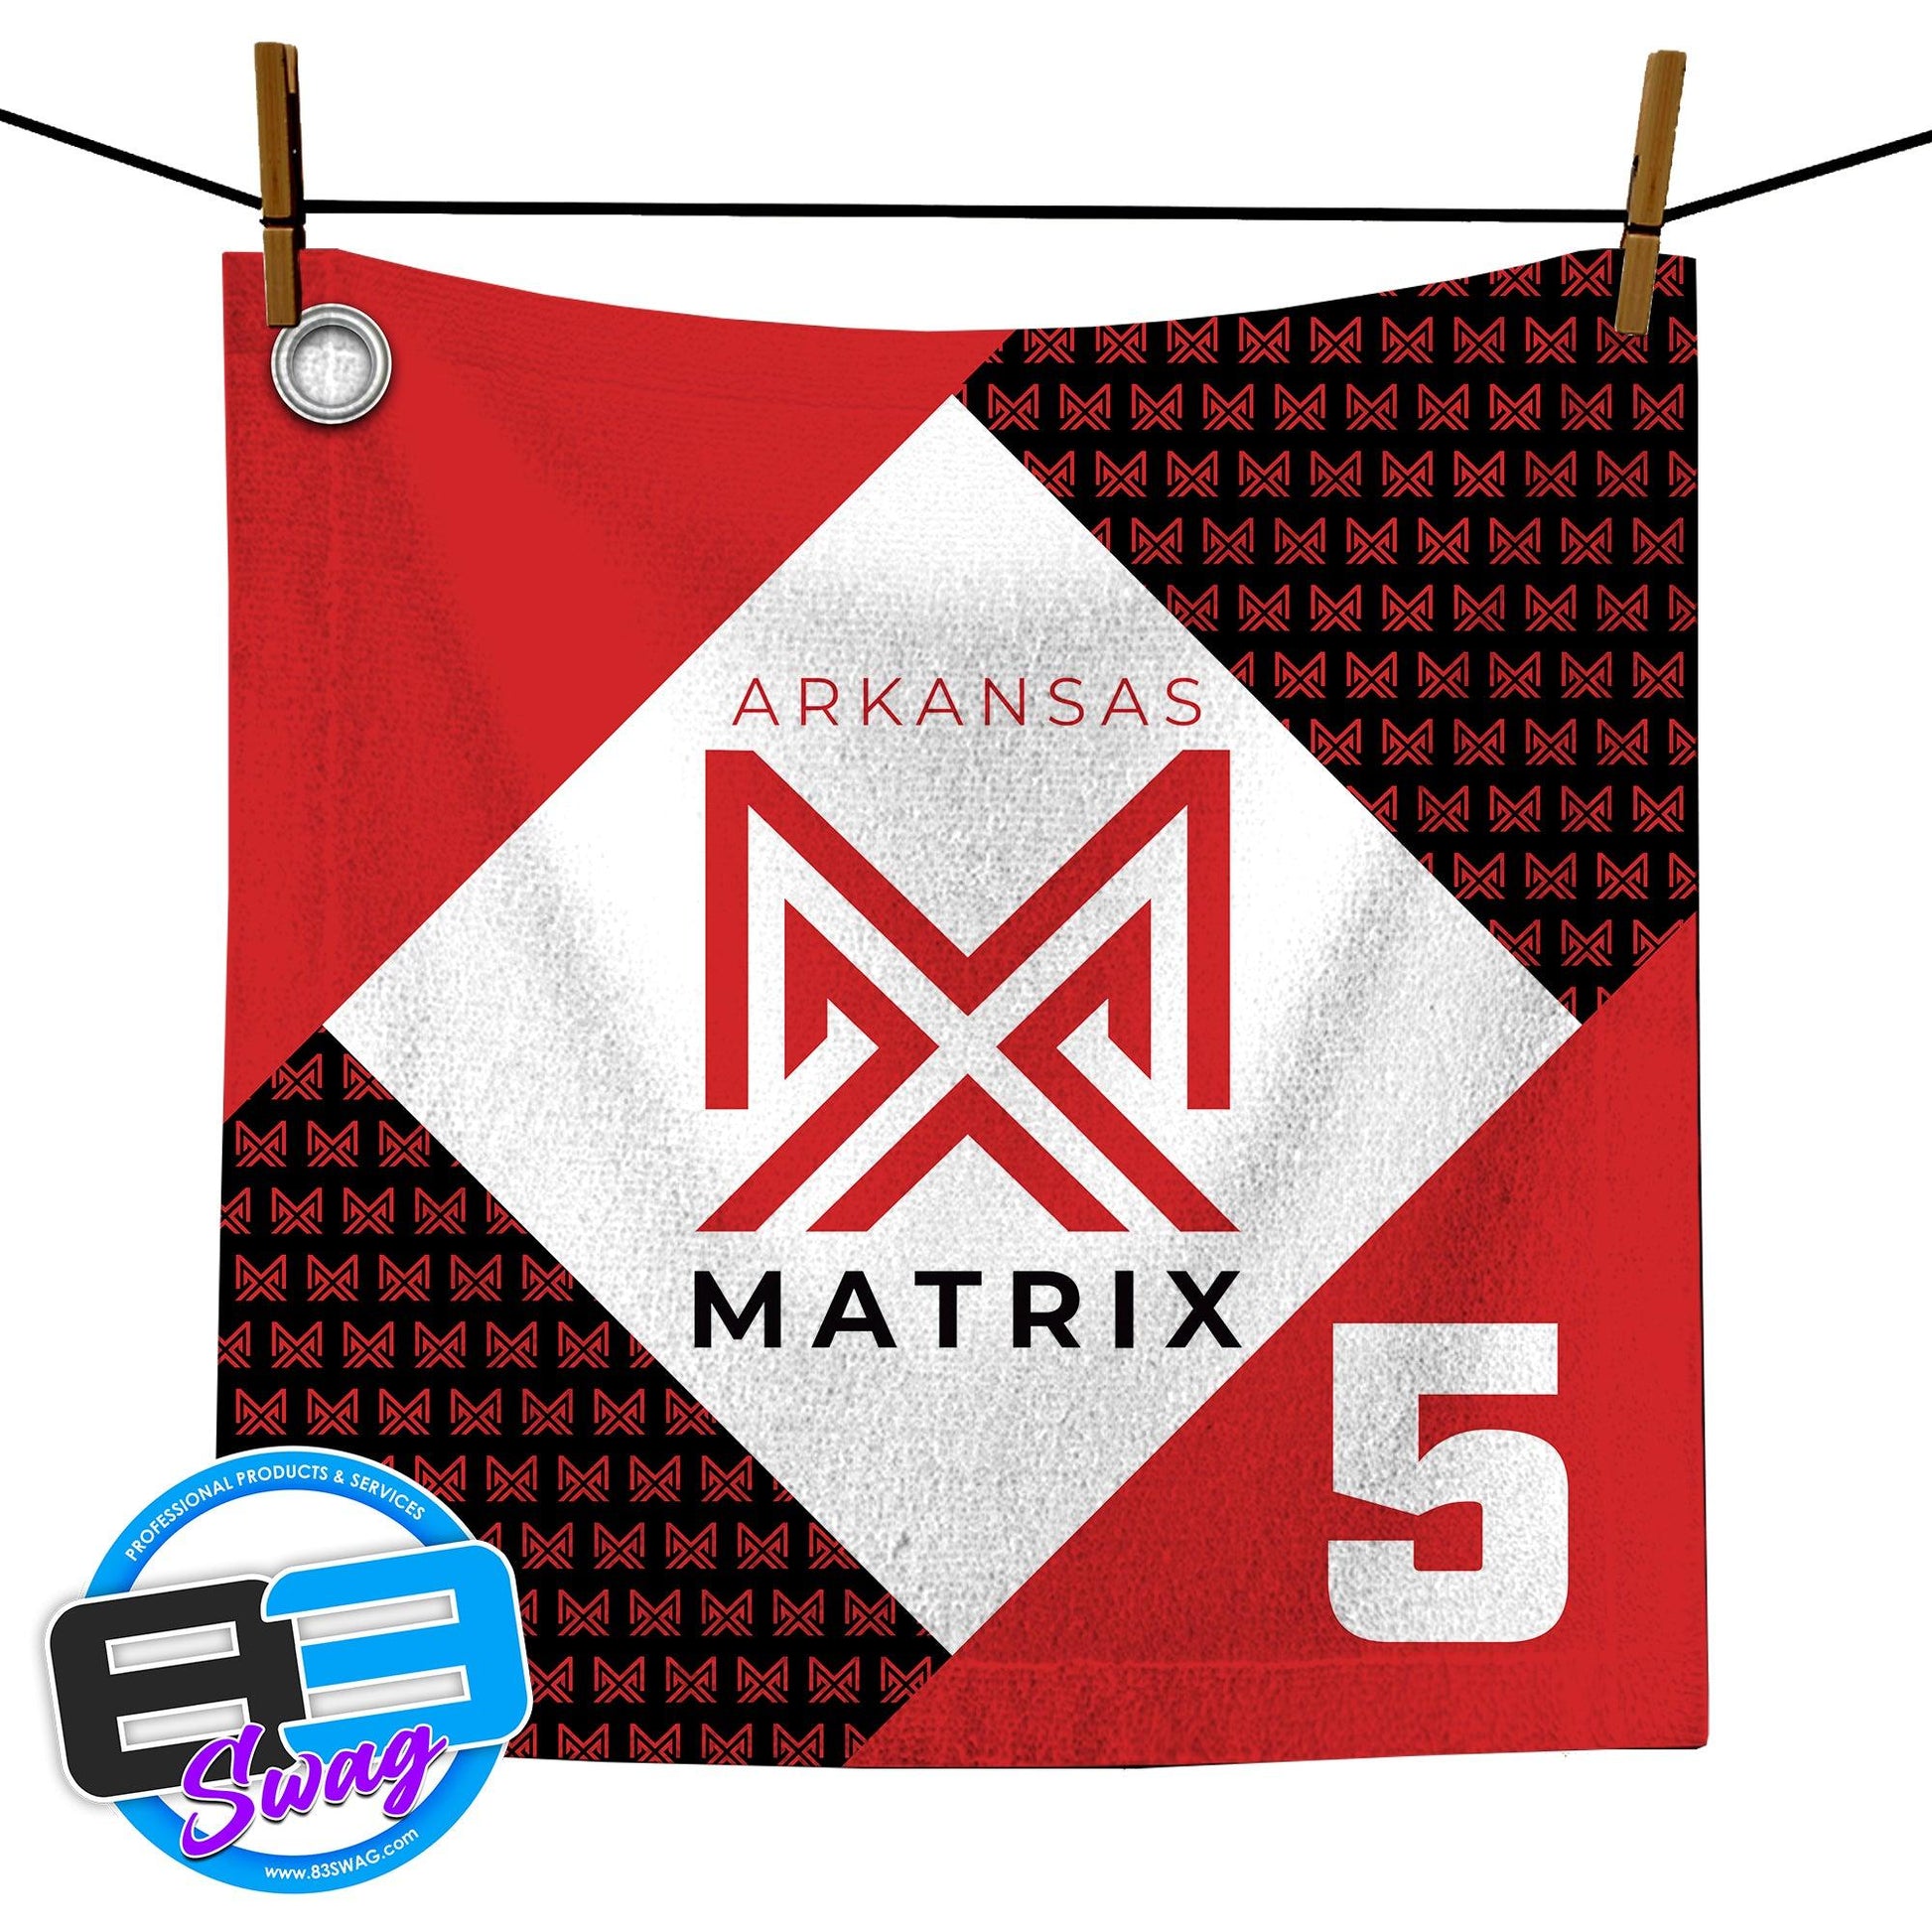 14"x14" Rally Towel - Arkansas Matrix - 83Swag